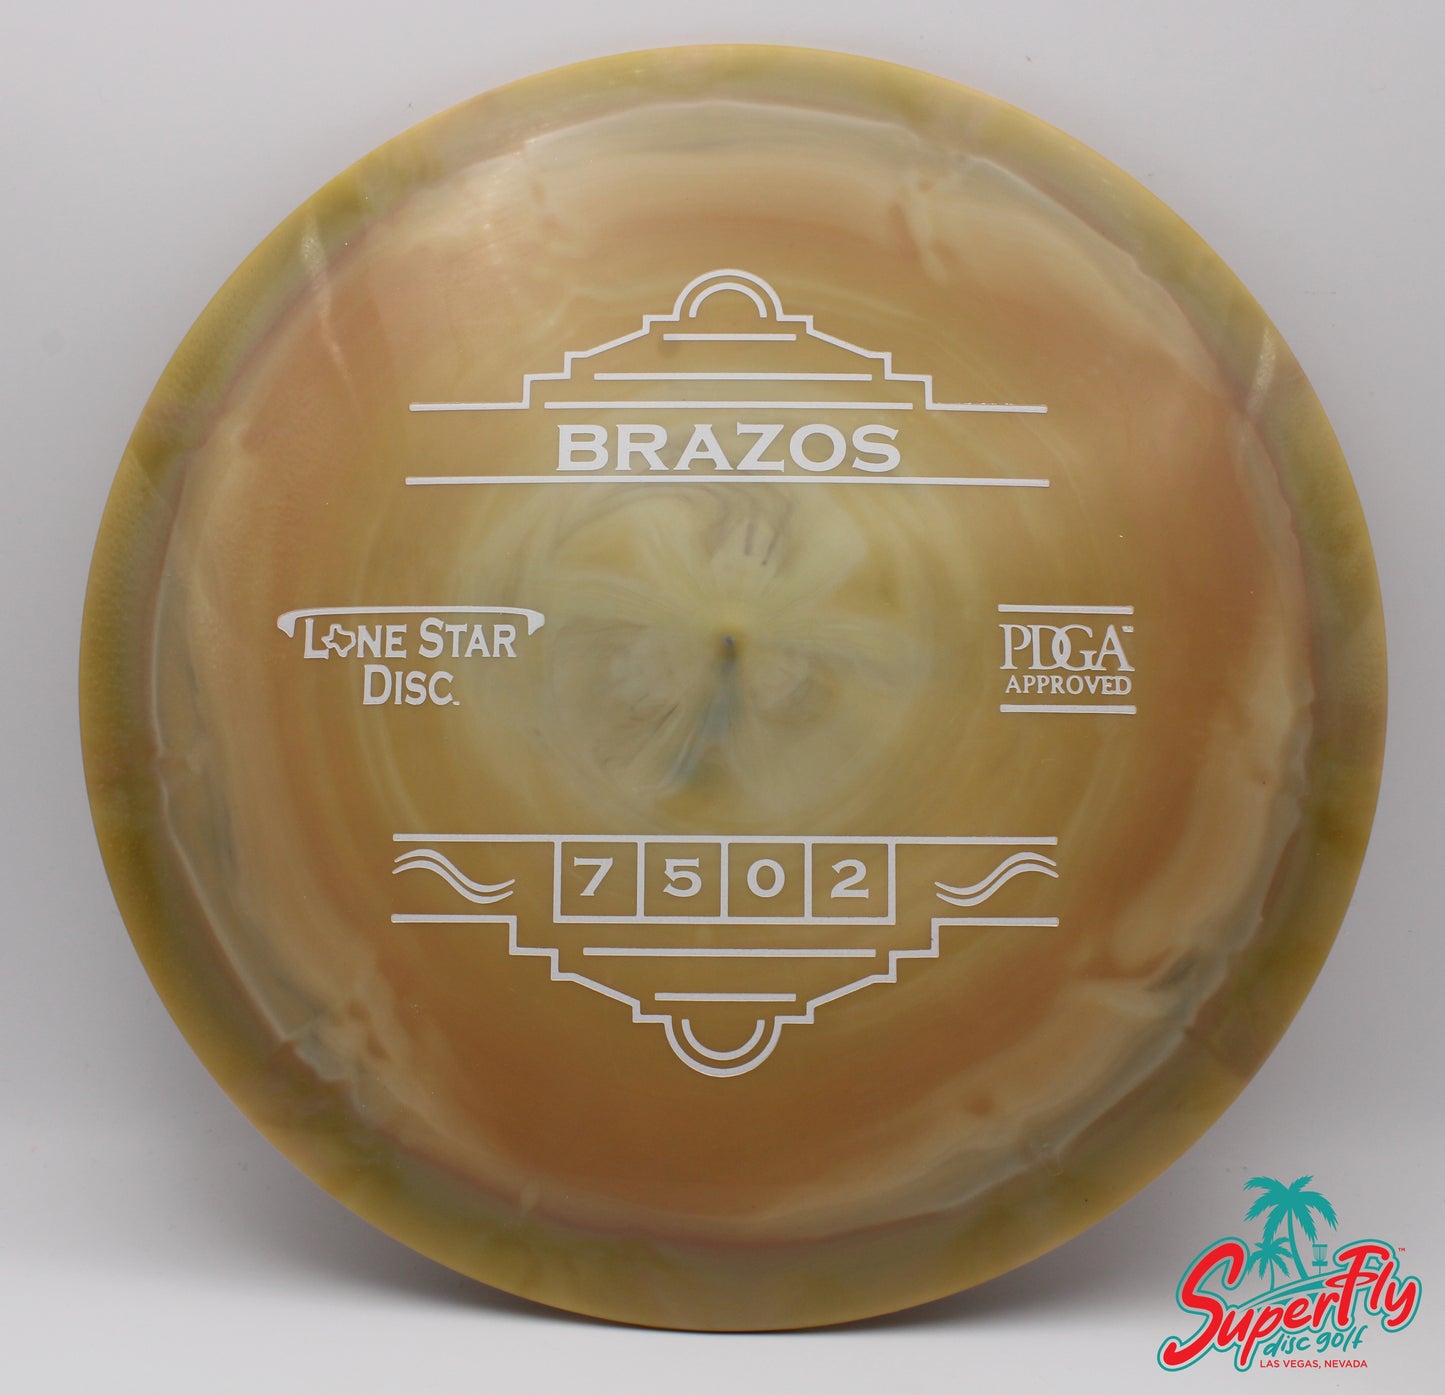 Lone Star Disc Bravo Brazos